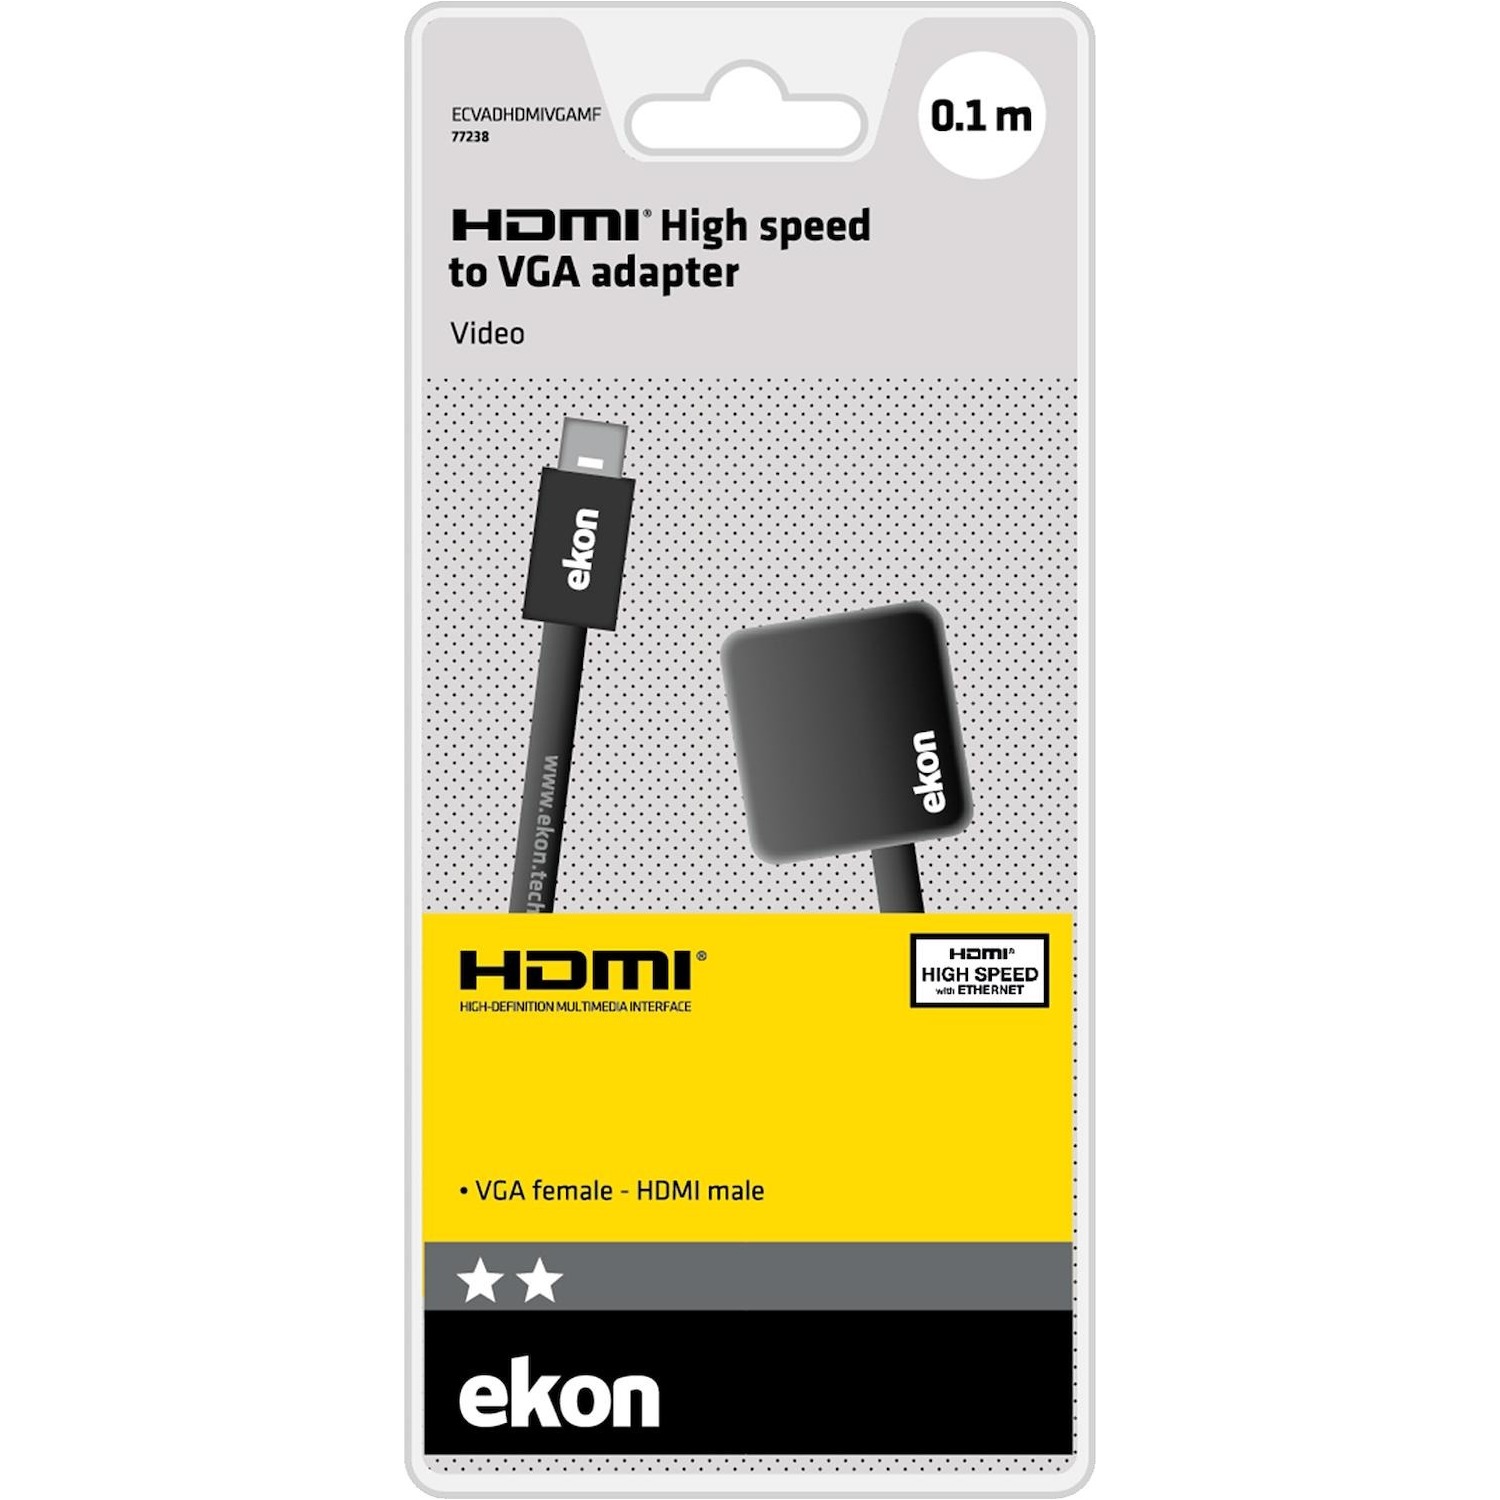 Immagine per Adattatore Ekon HDMI maschio ad alta velocità a VGA tipo femmina, lunghezza 10 cm da DIMOStore